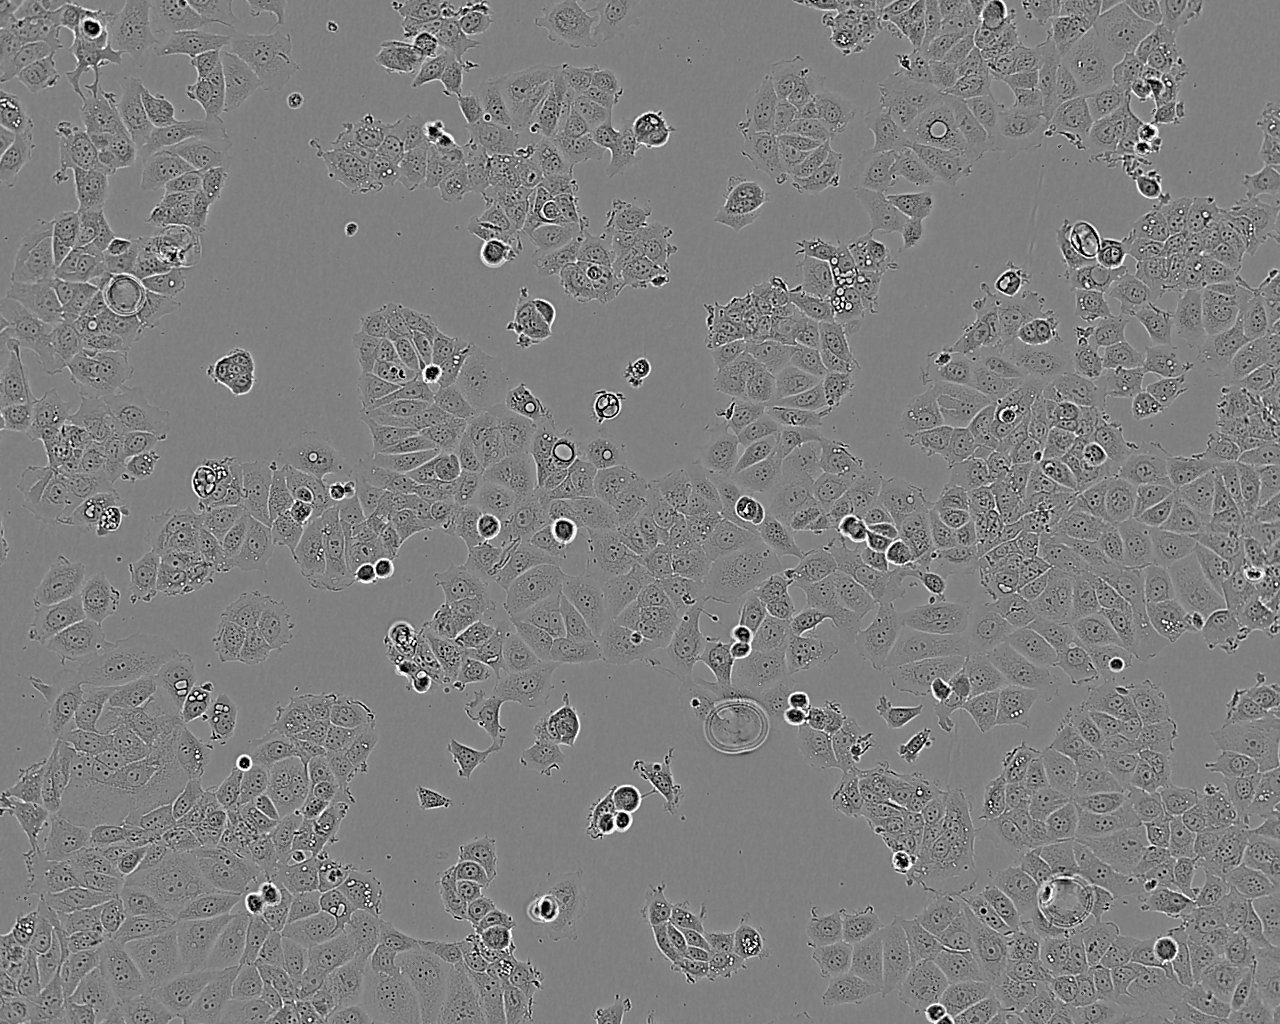 TE-4 Cells|人食管癌细胞系